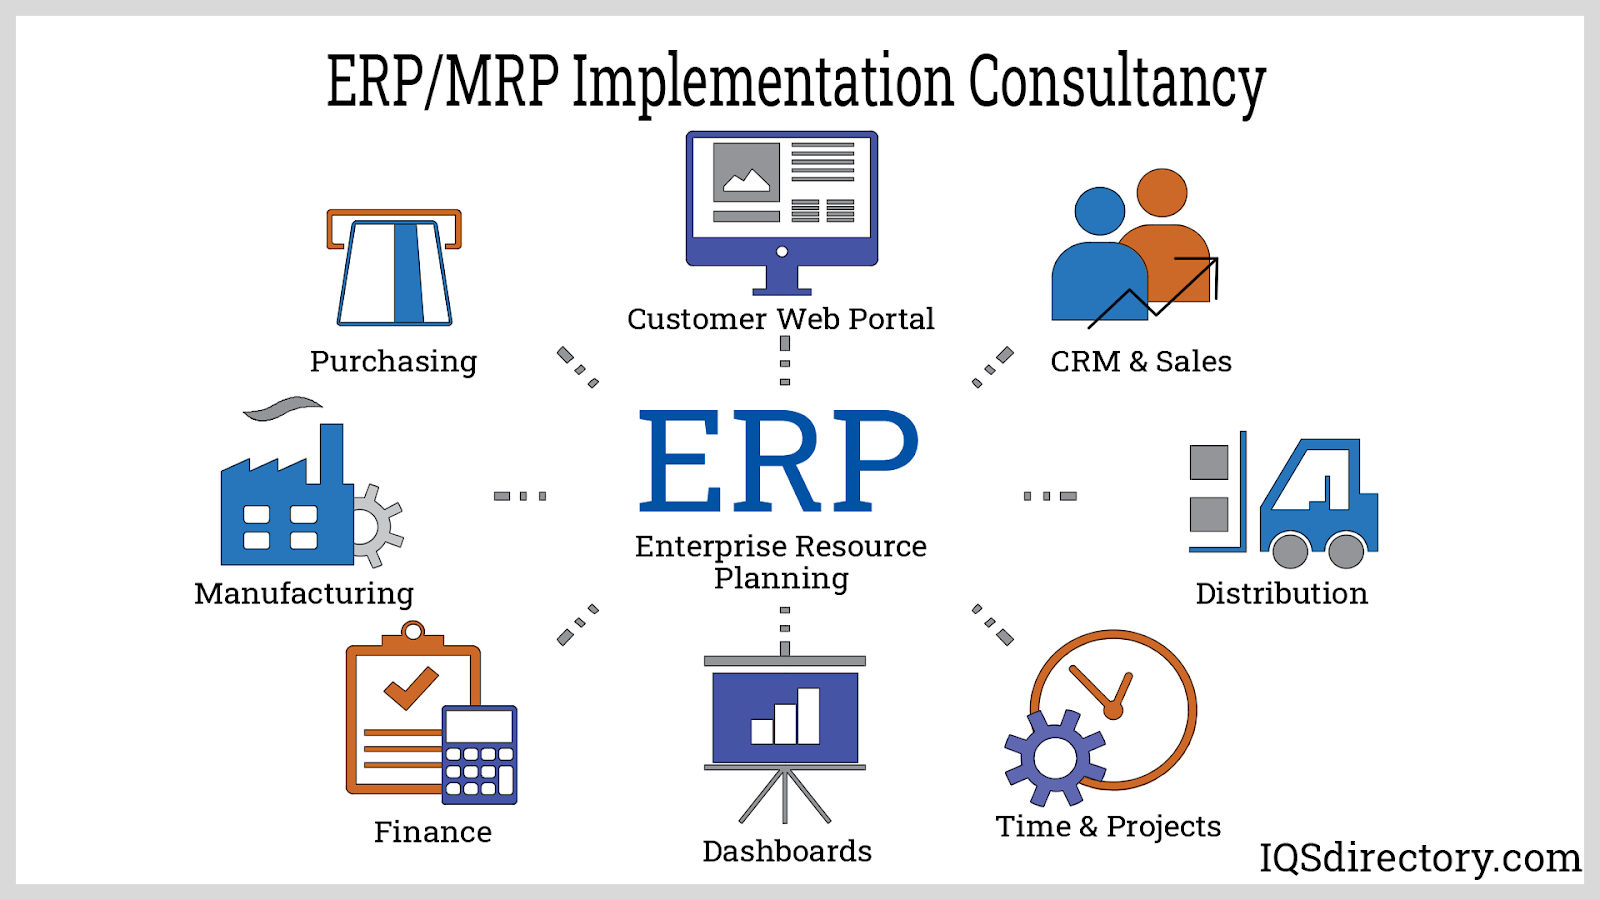 ERP/MRP Implementation Consultancy